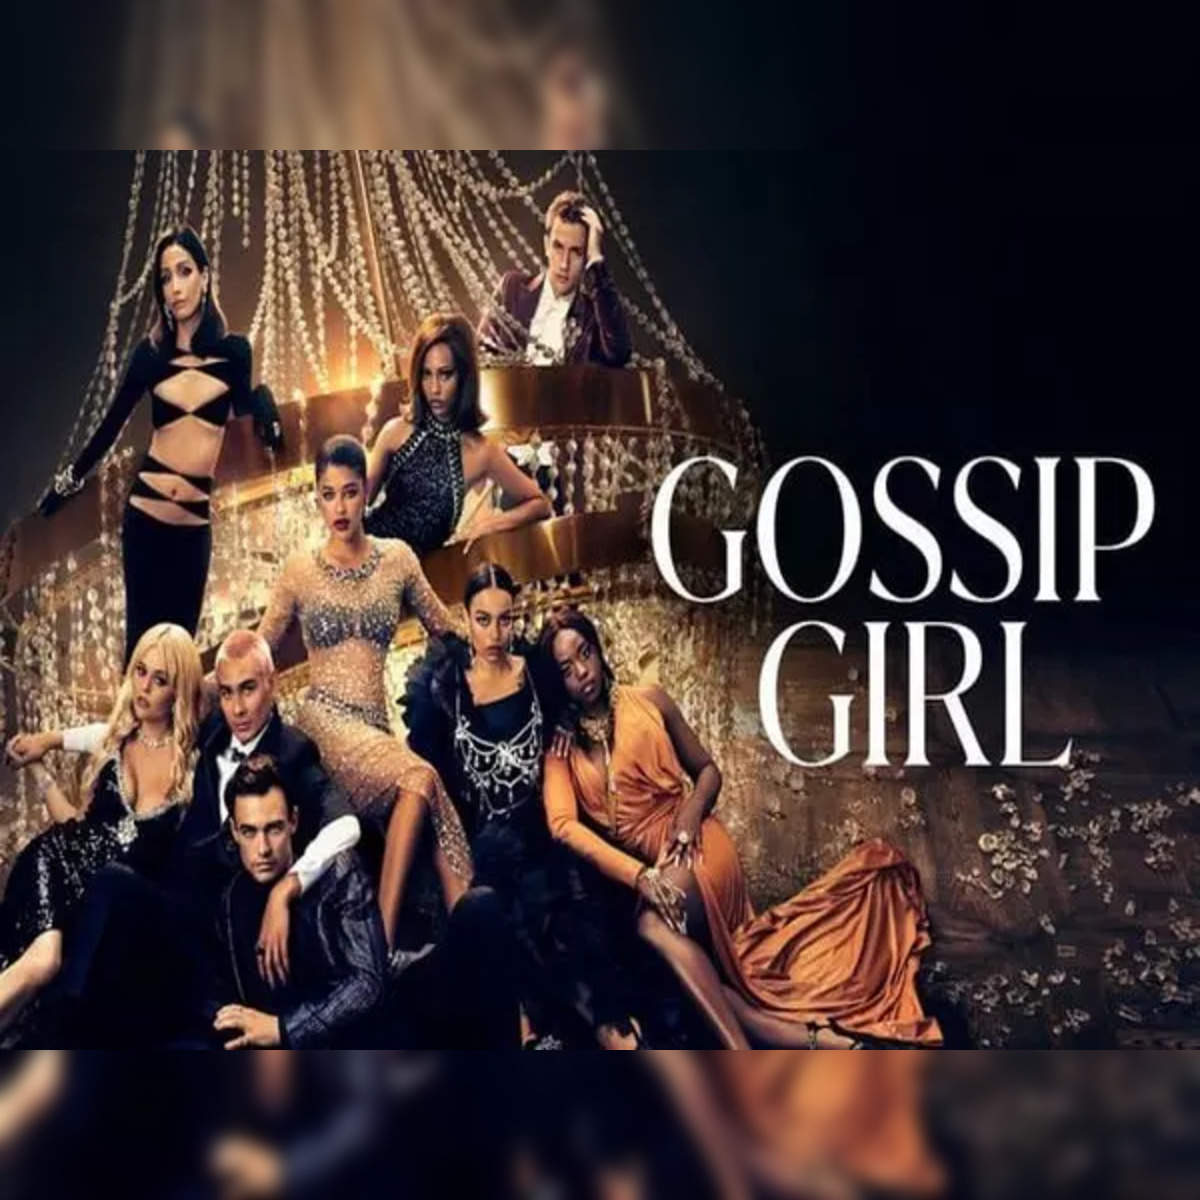 Anyone else remember this Netflix description of the OG Gossip